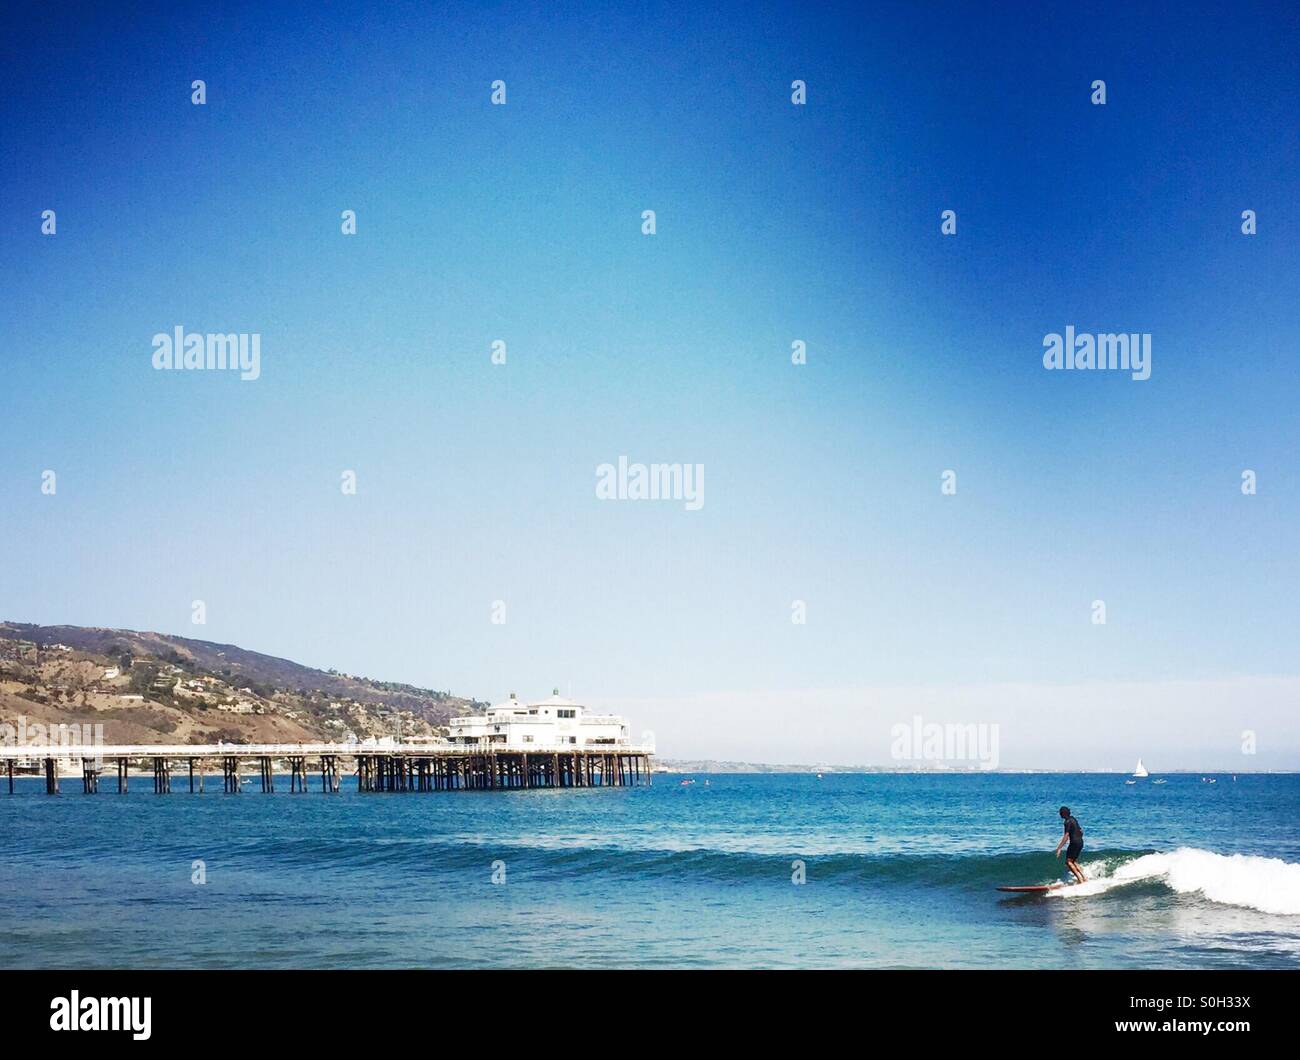 A surfer rides a wave at surfrider beach malibu, California USA. Stock Photo